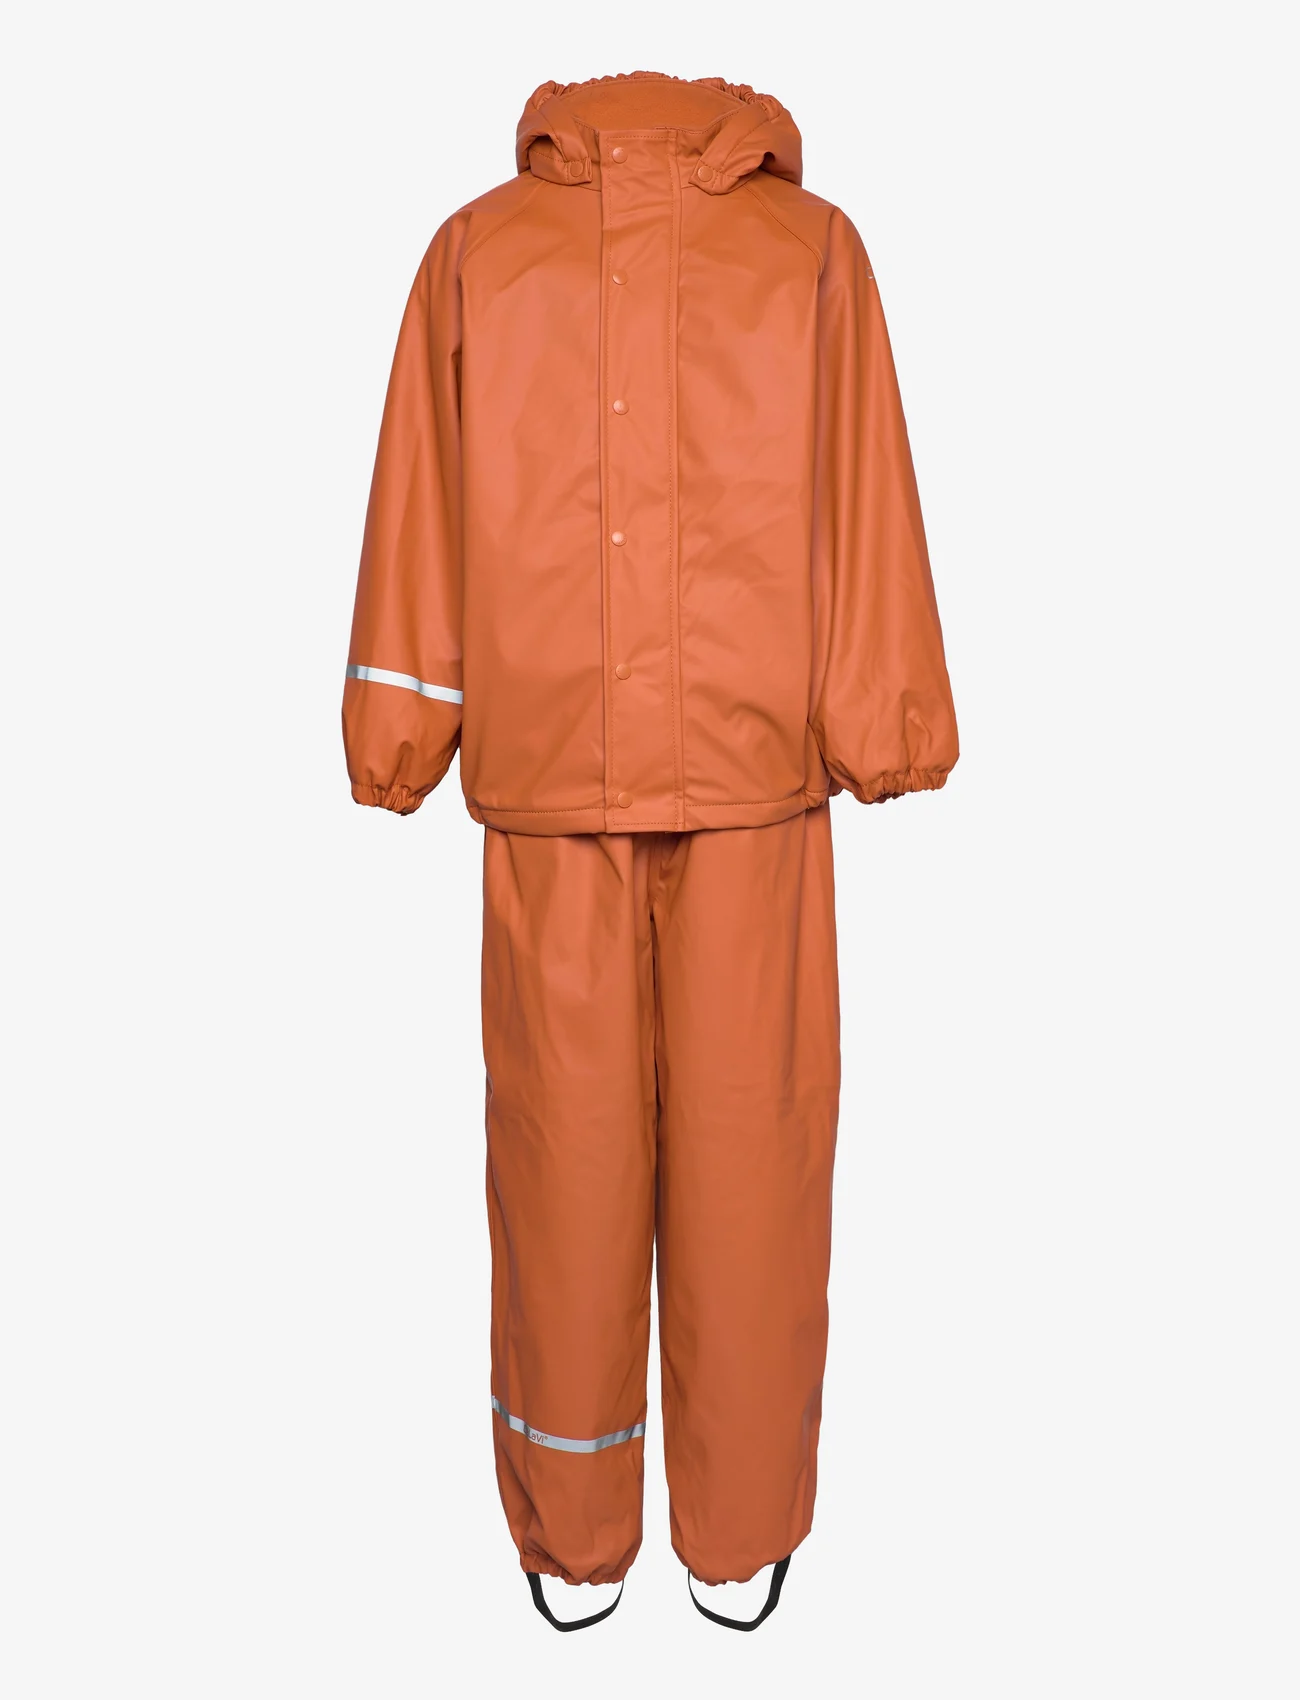 CeLaVi - Rainwear Set -Solid, w.fleece - Žieminiai kombinezonai - amber brown - 0